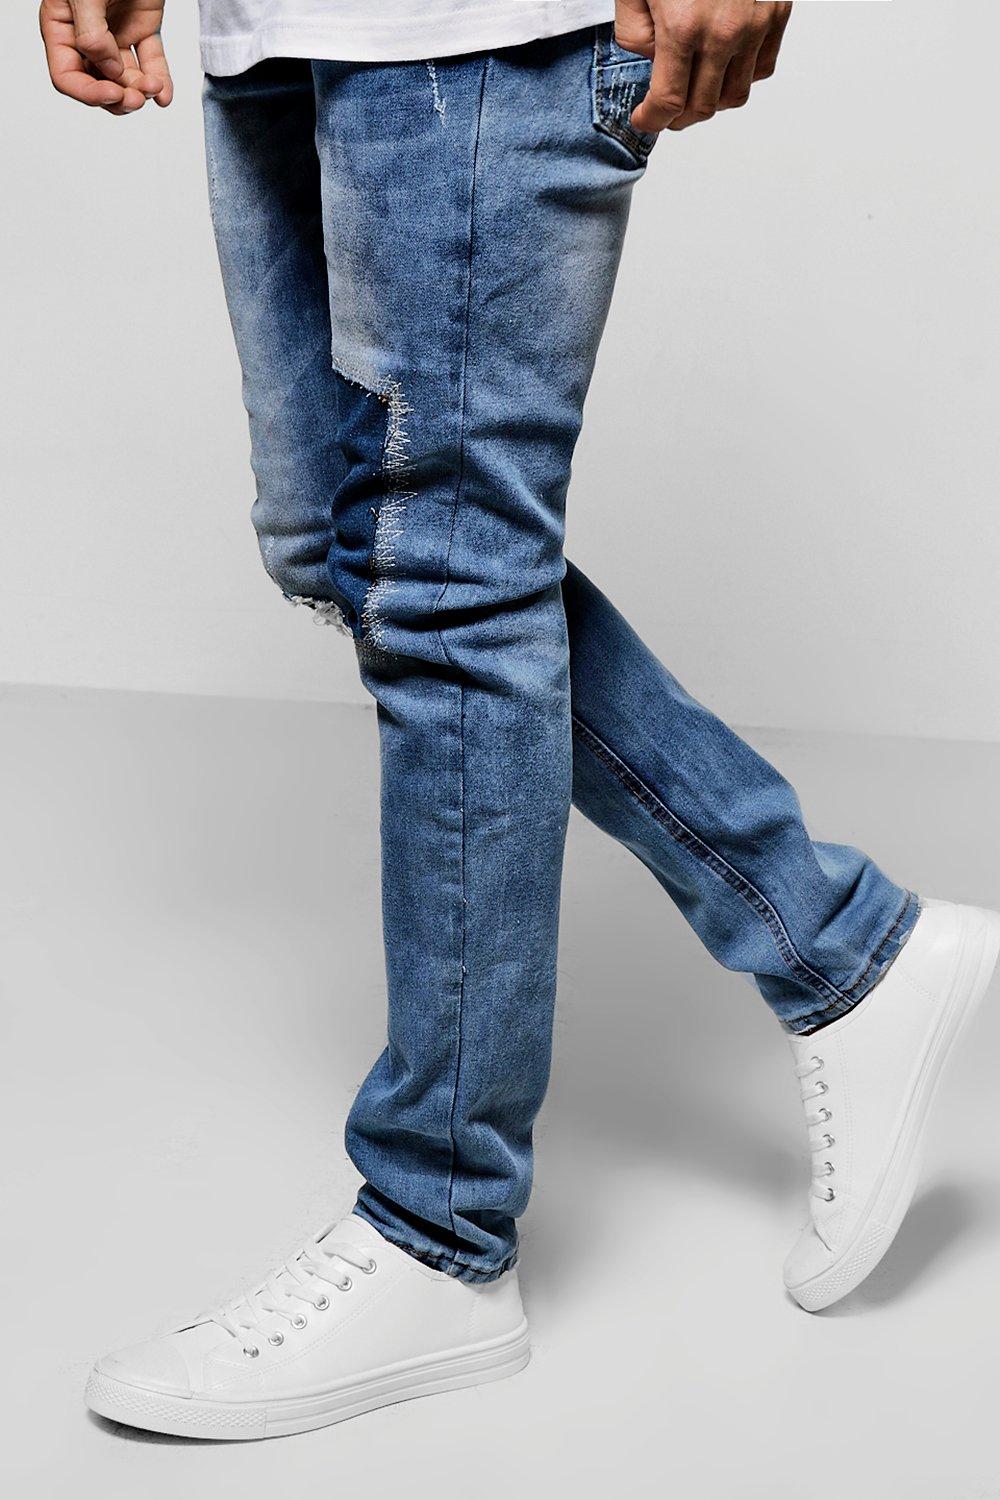 pale denim jeans